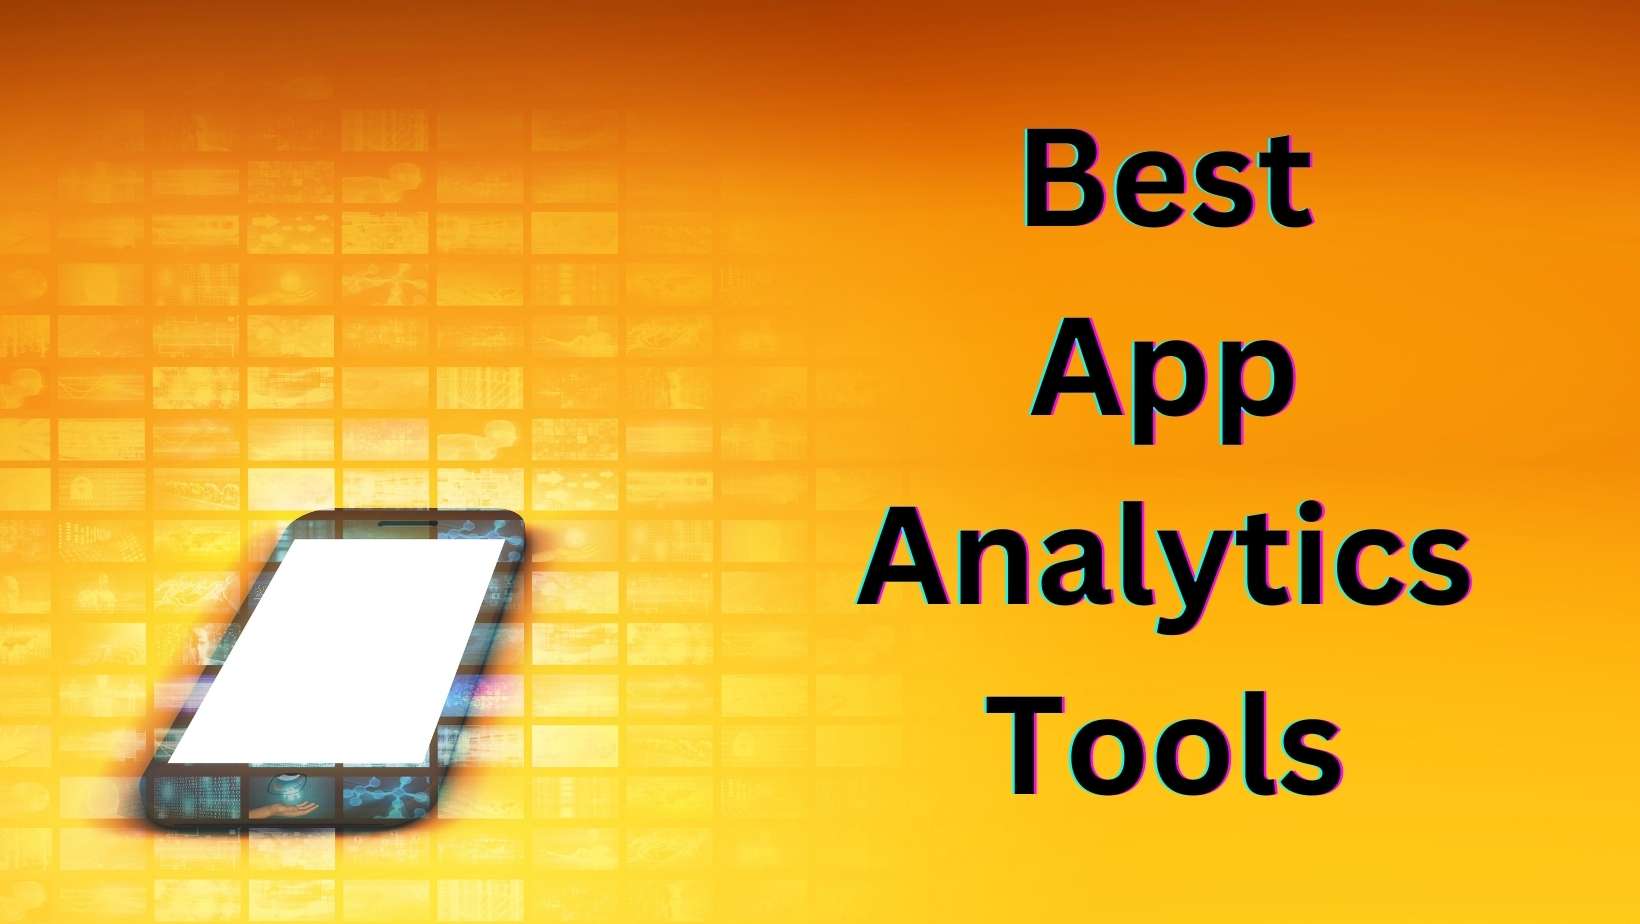 Best App Analytics Tools to speed up your progress